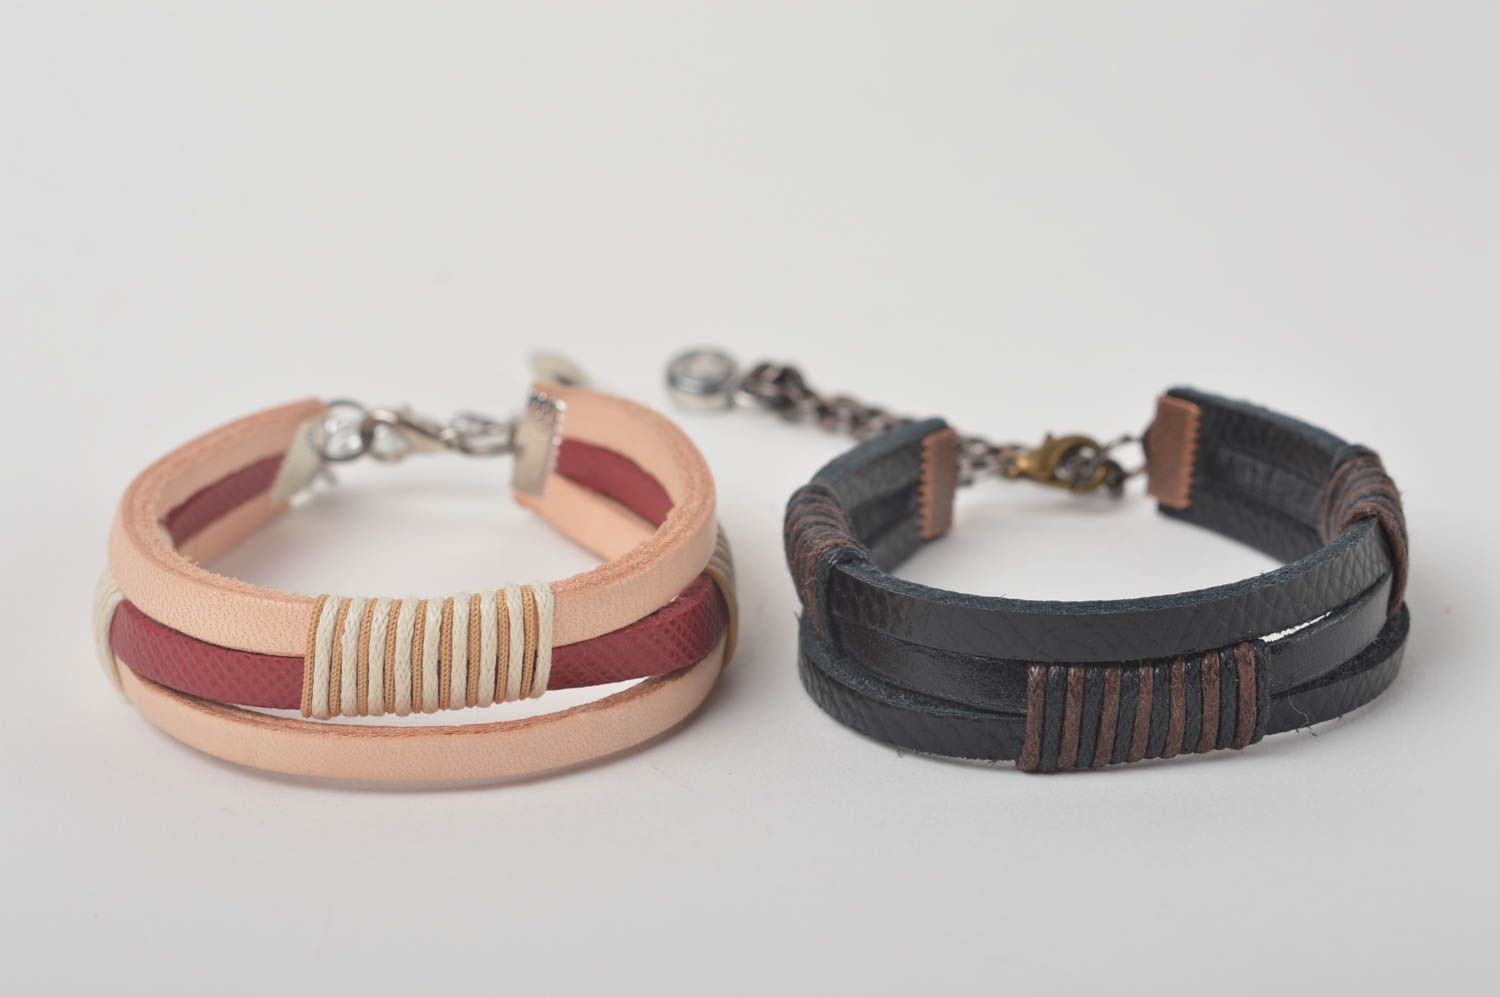 Unusual handmade leather bracelets wrist bracelet designs 2 pieces cool jewelry photo 3